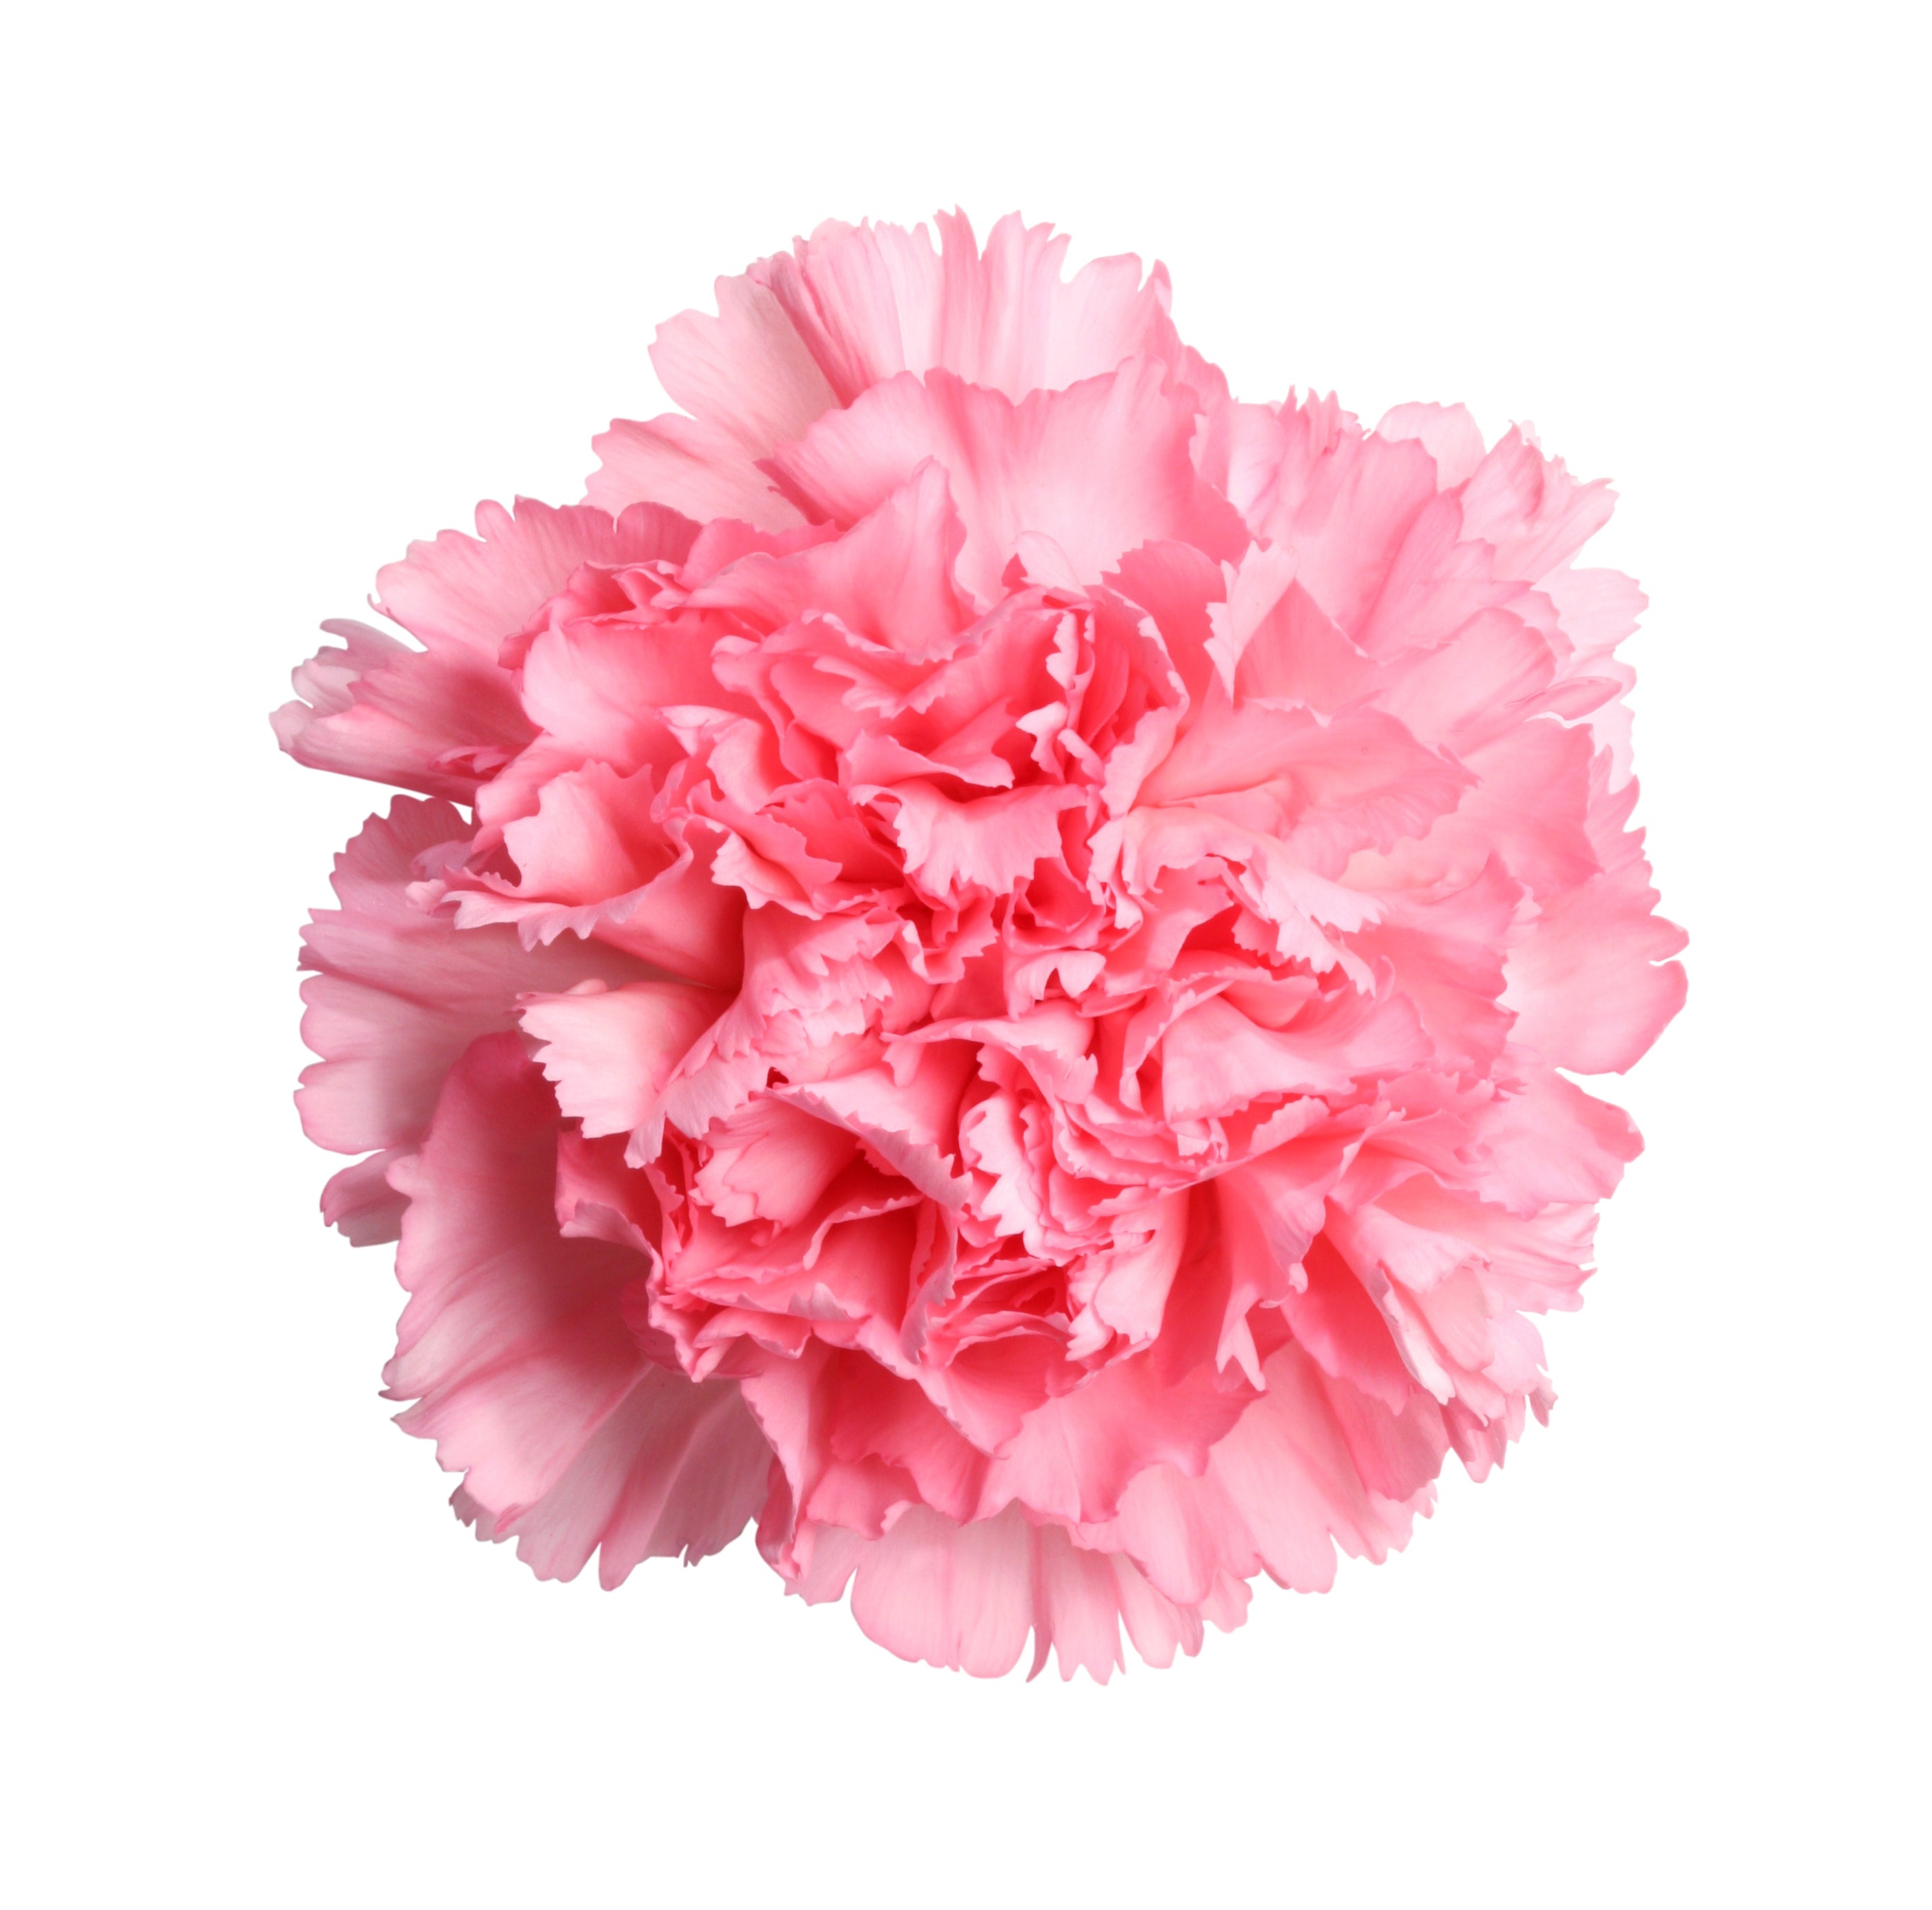 Carnation Wedding Assortment, 100/100 Stems - White, Hot Pink